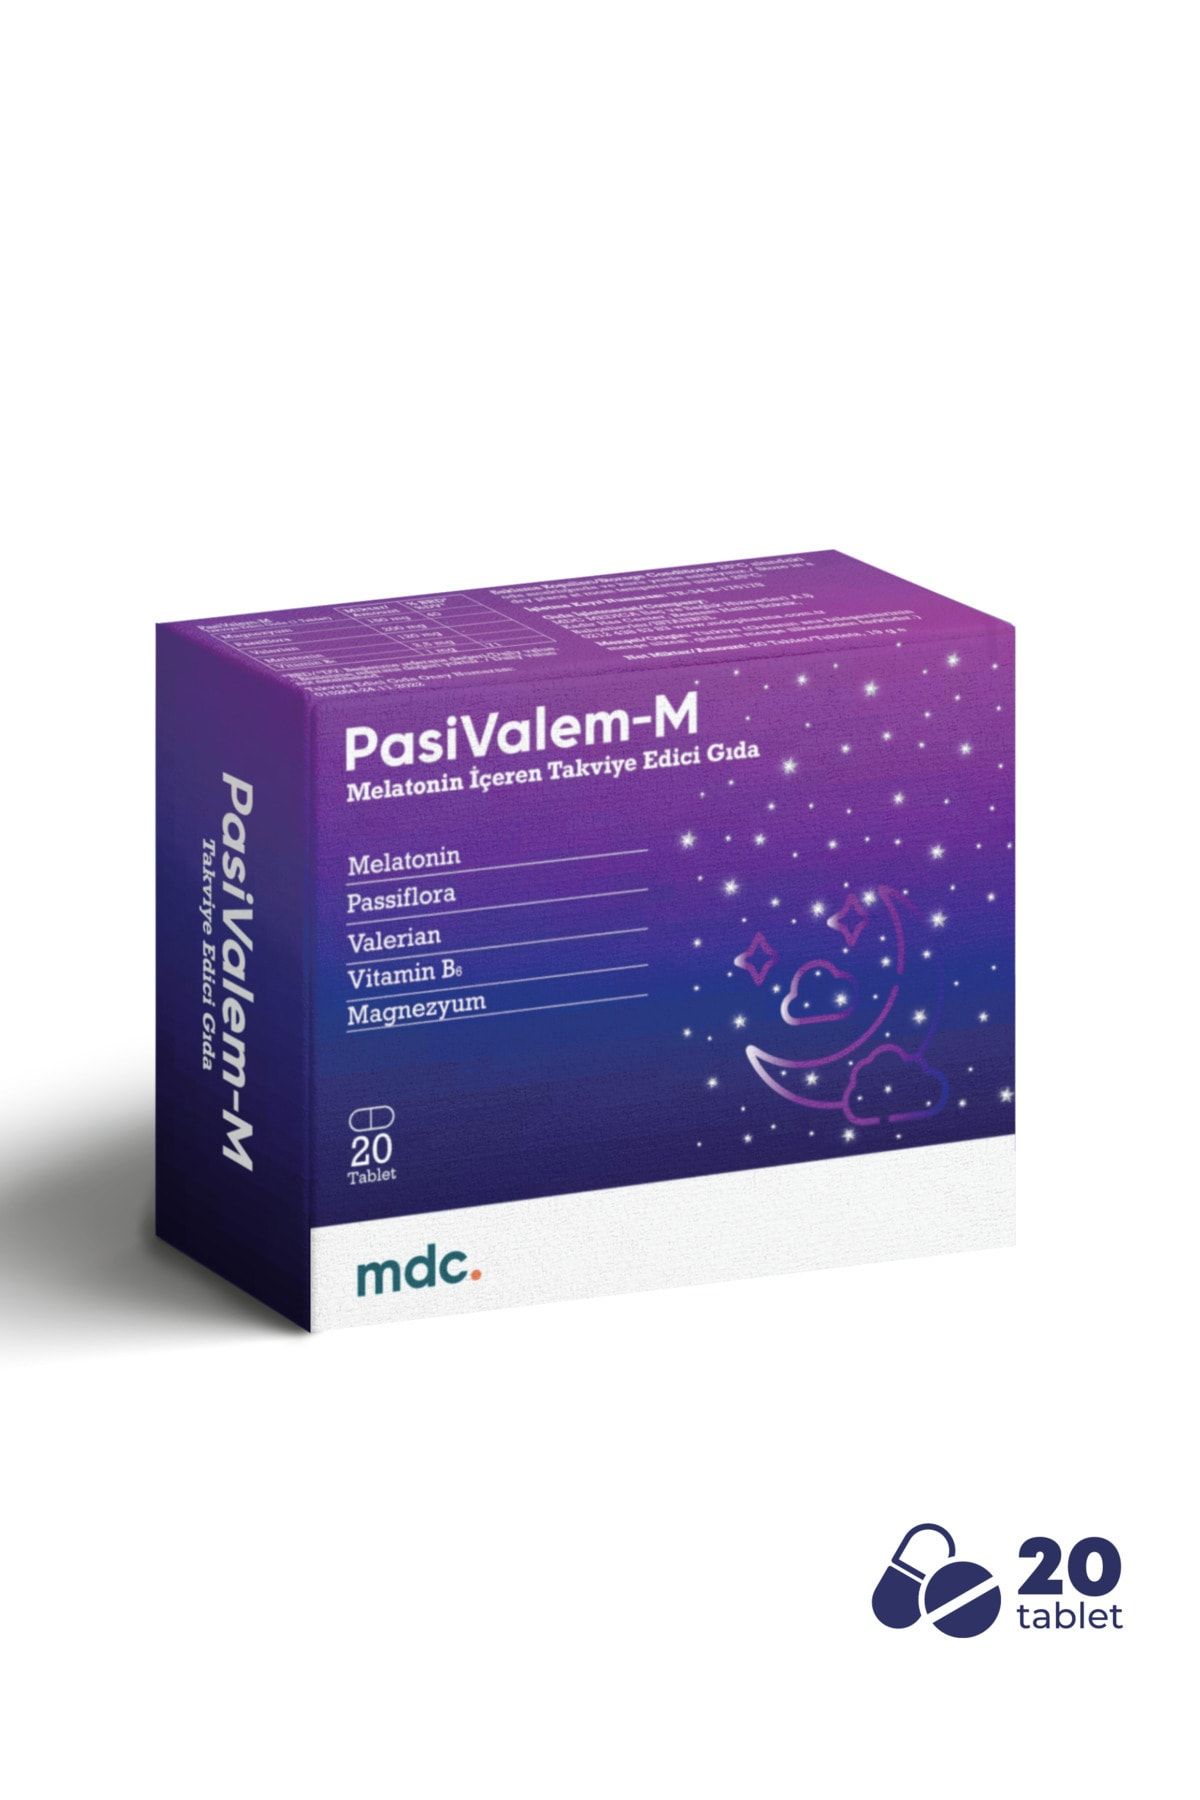 MDC Pasivalem-M Melatonin 2,5 mg Passiflora Valerian Vit B6 Magnesium 20 Tablet - 10 Adet